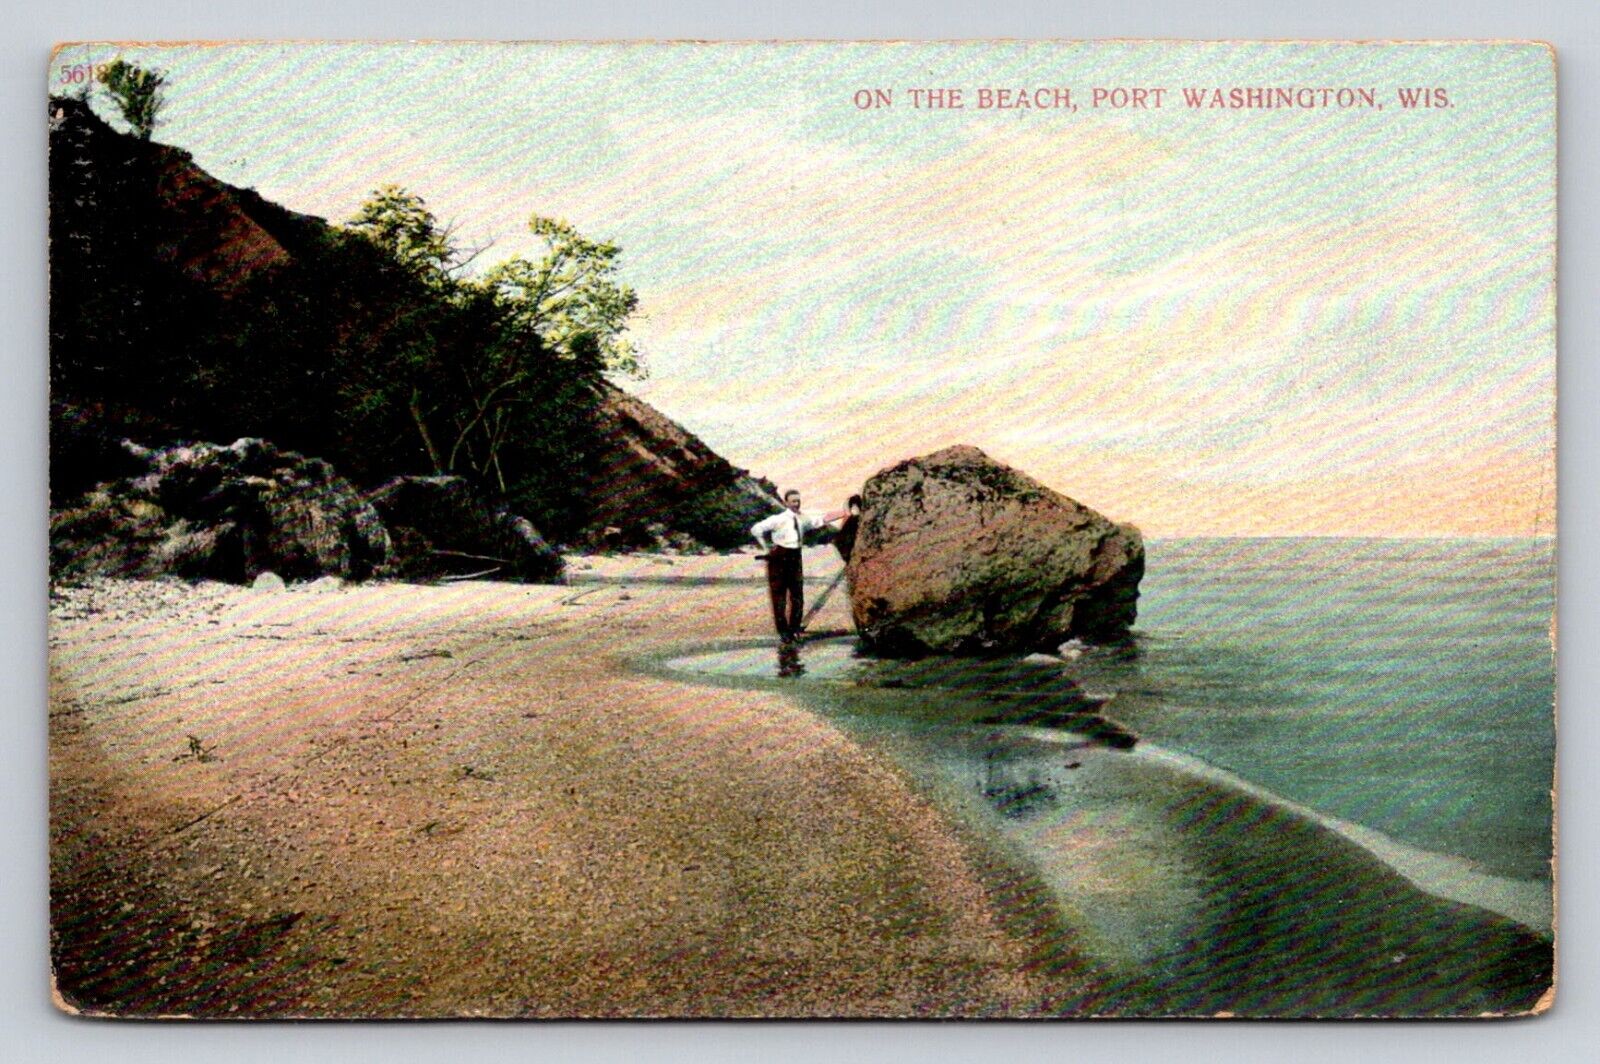 c1910 Man Large BOulder Rock On The Beach Port Washington Wisconsin P817